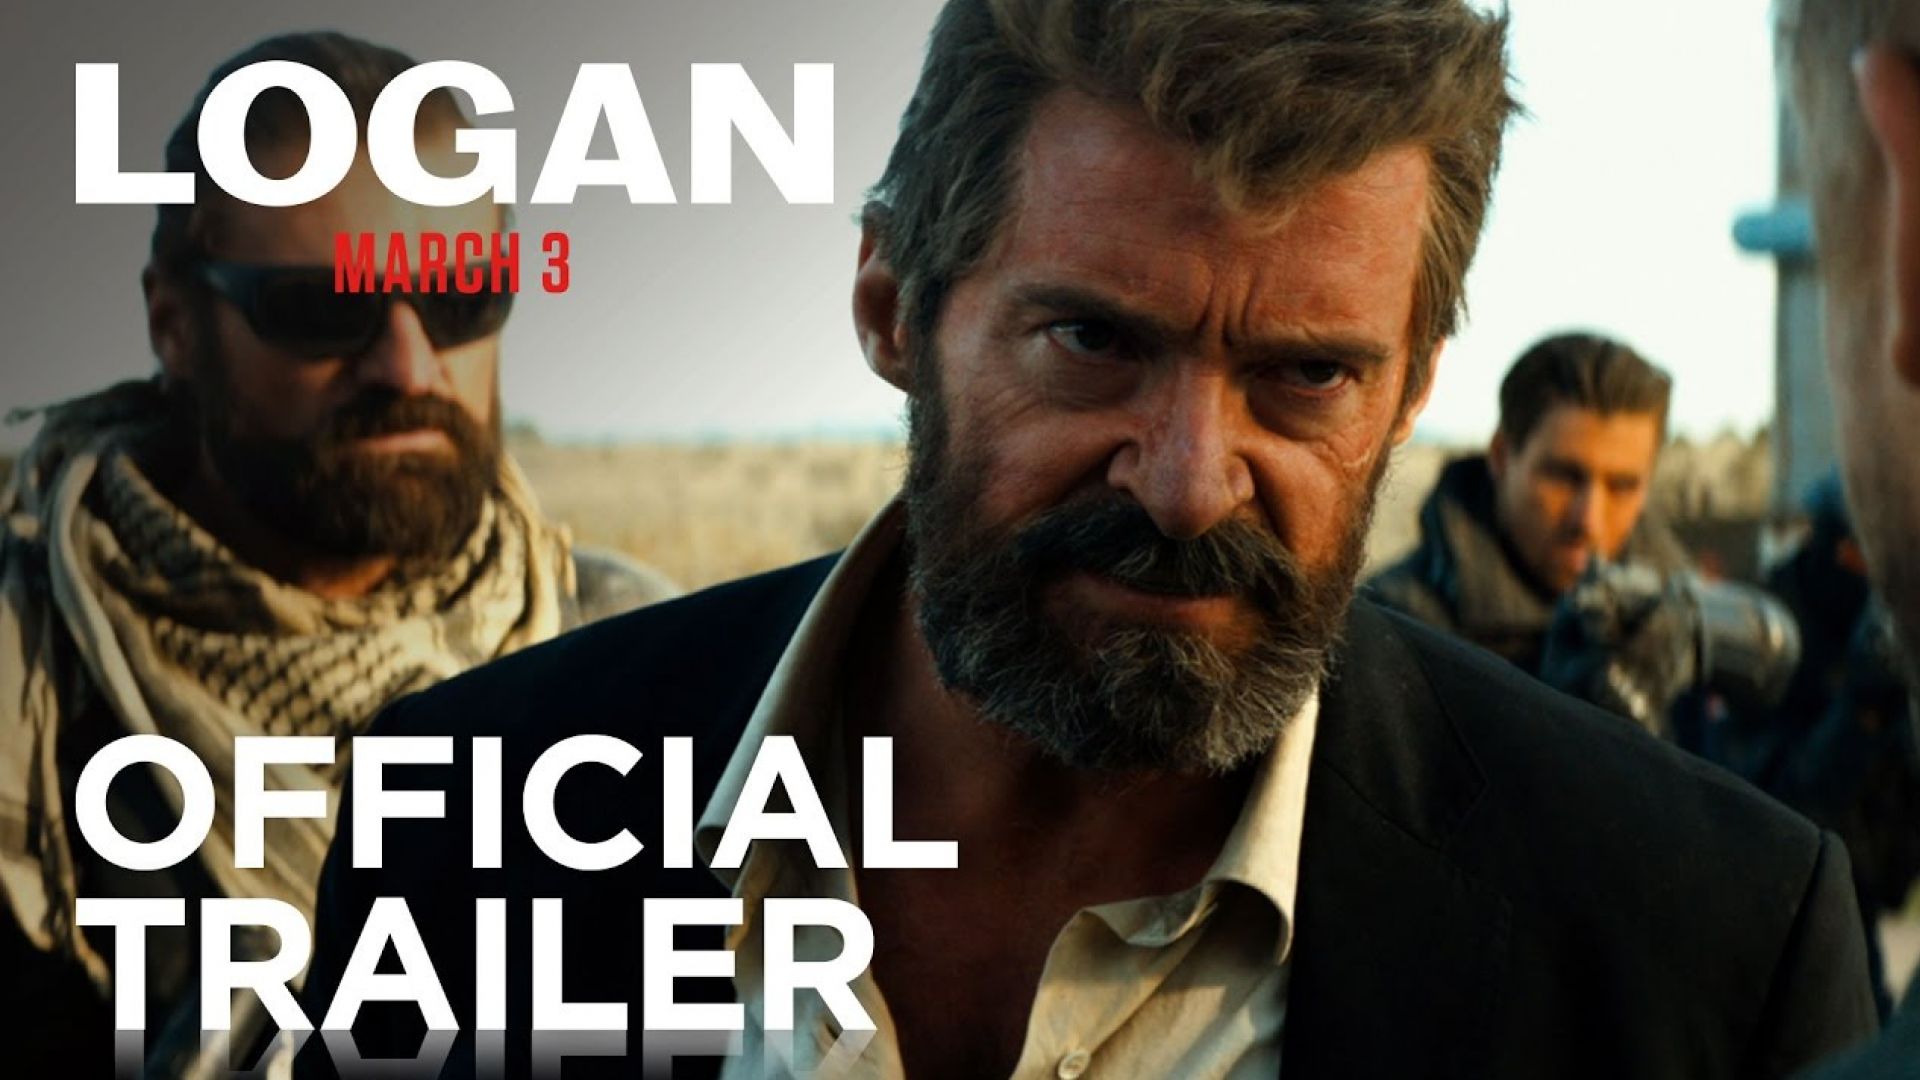 Watch Logan Film Online Full HD